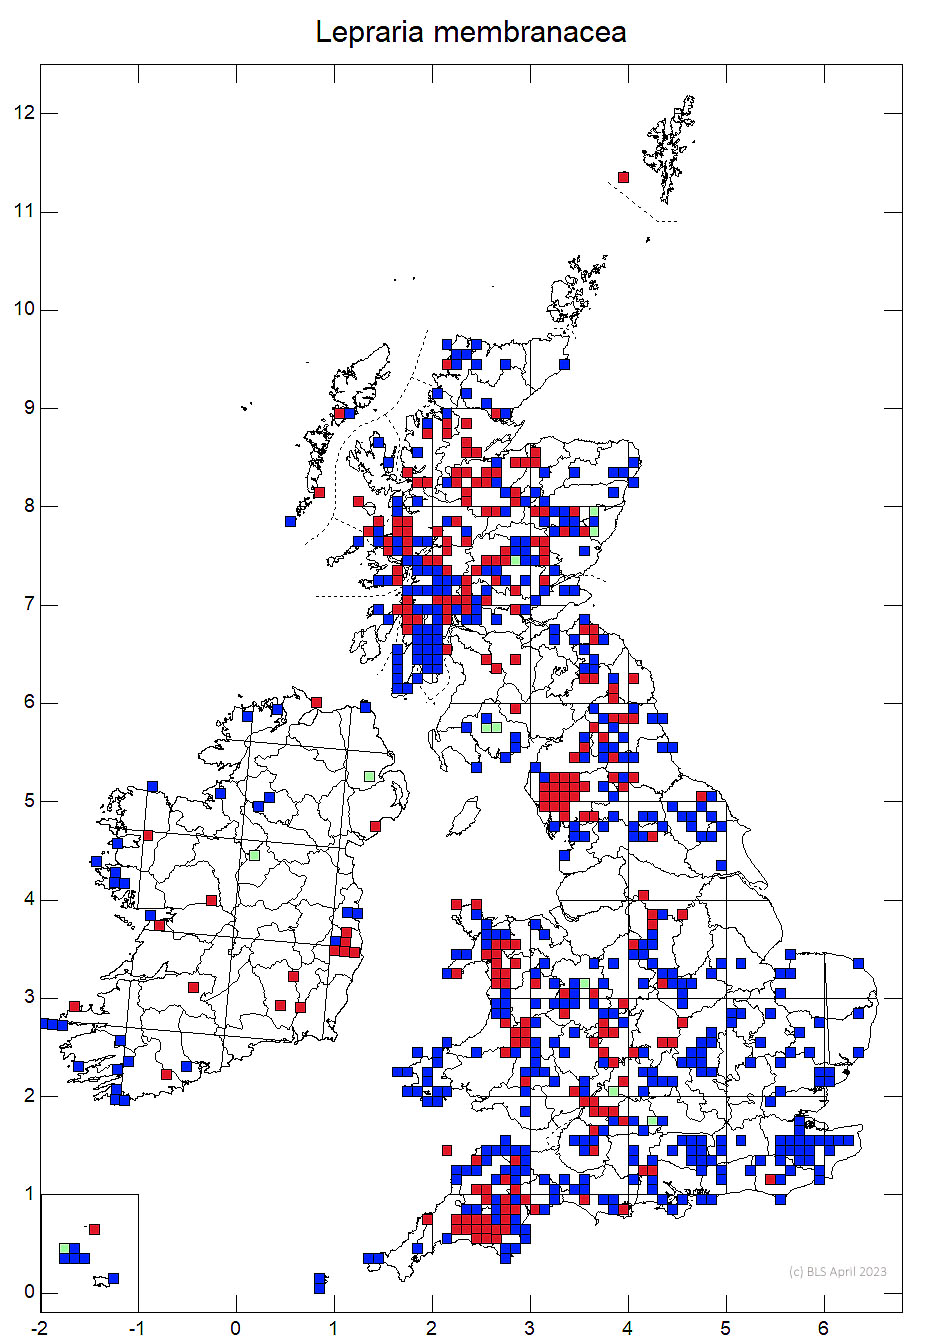 Lepraria membranacea 10km sq distribution map